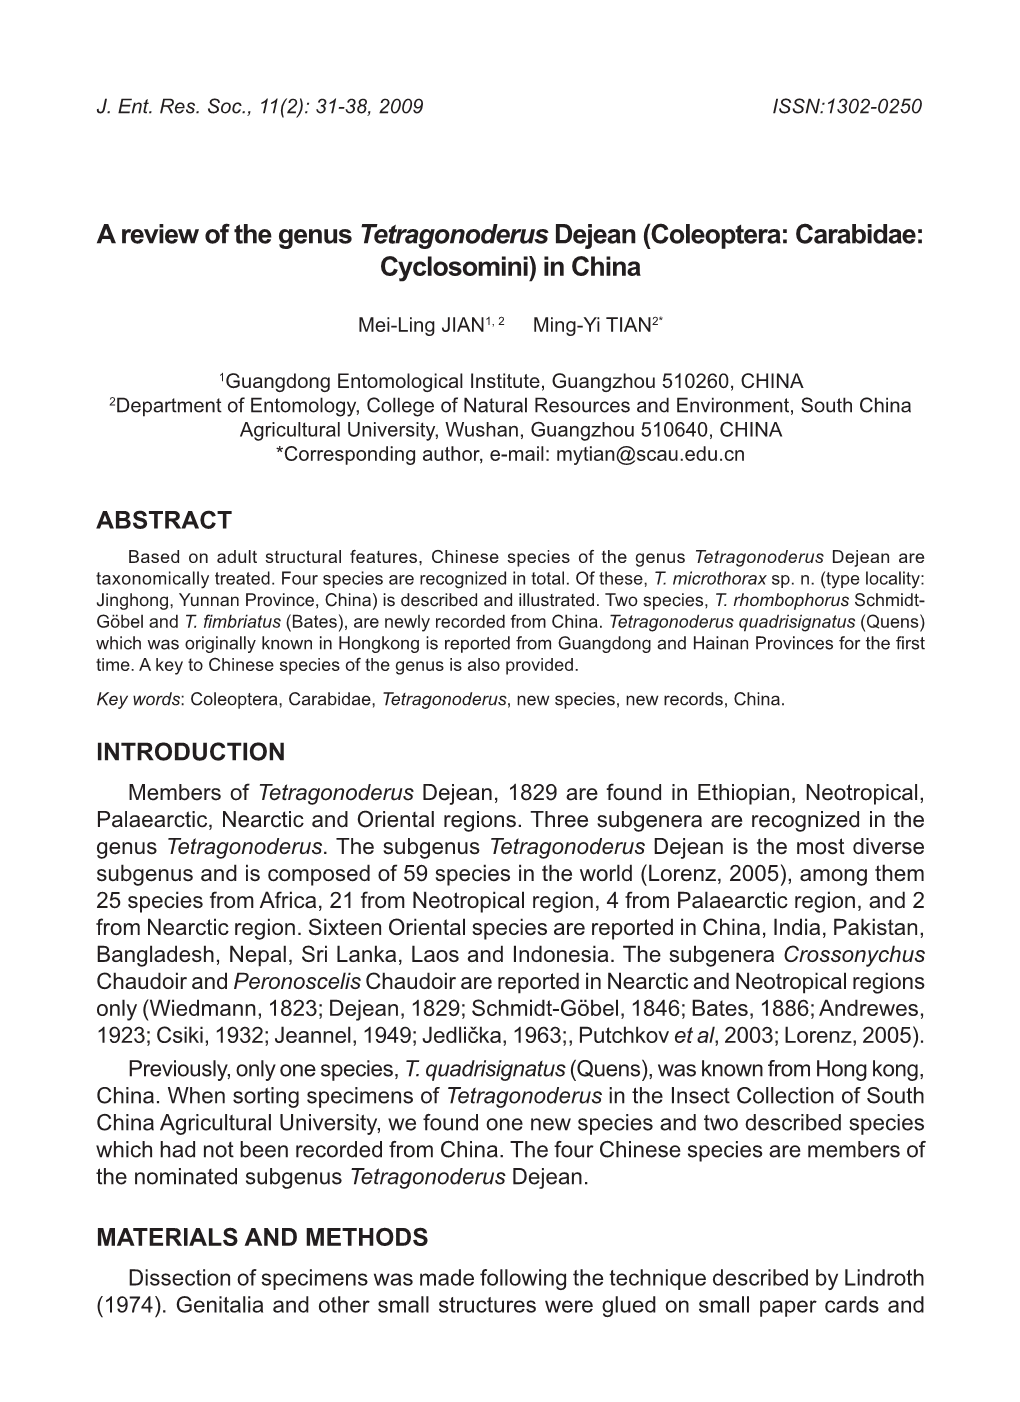 A Review of the Genus Tetragonoderus Dejean (Coleoptera: Carabidae: Cyclosomini) in China